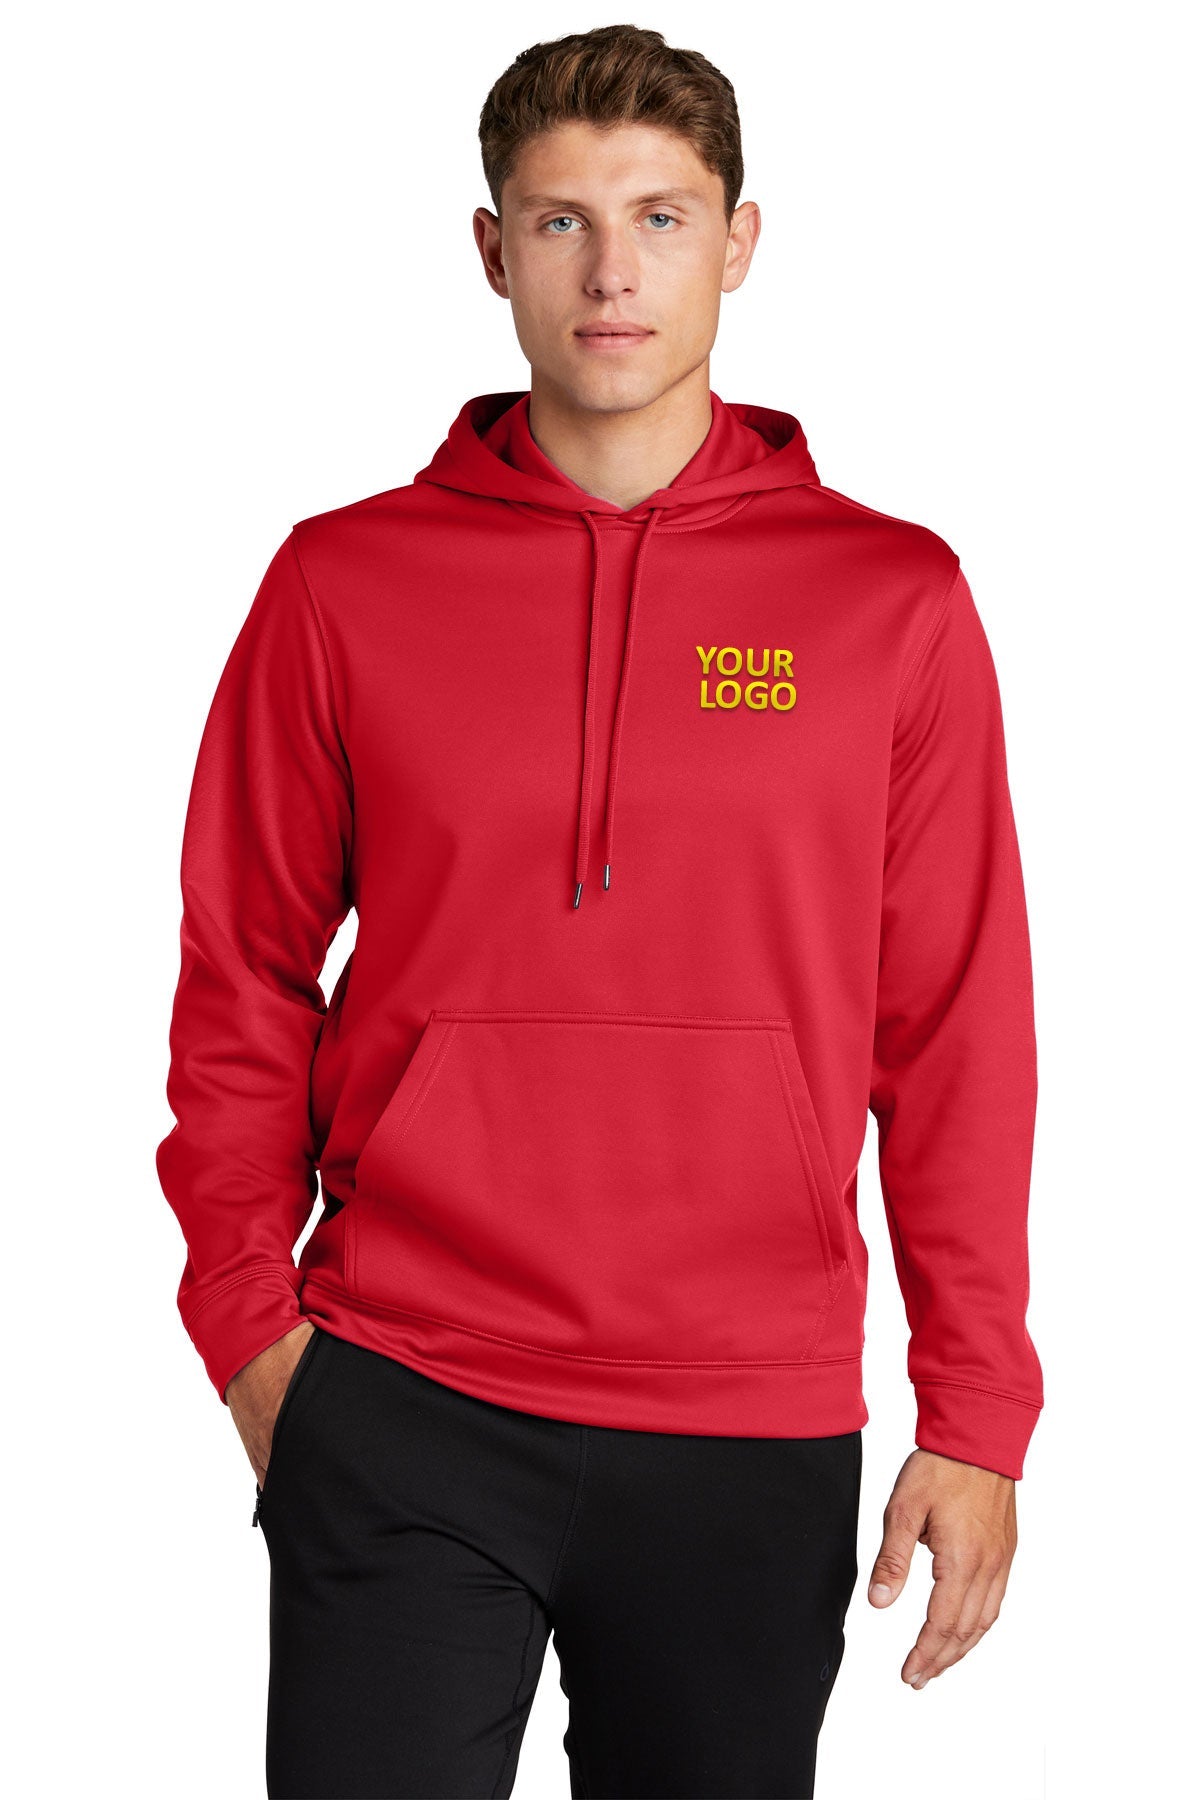 Sport-Tek Deep Red F244 custom logo sweatshirts embroidered